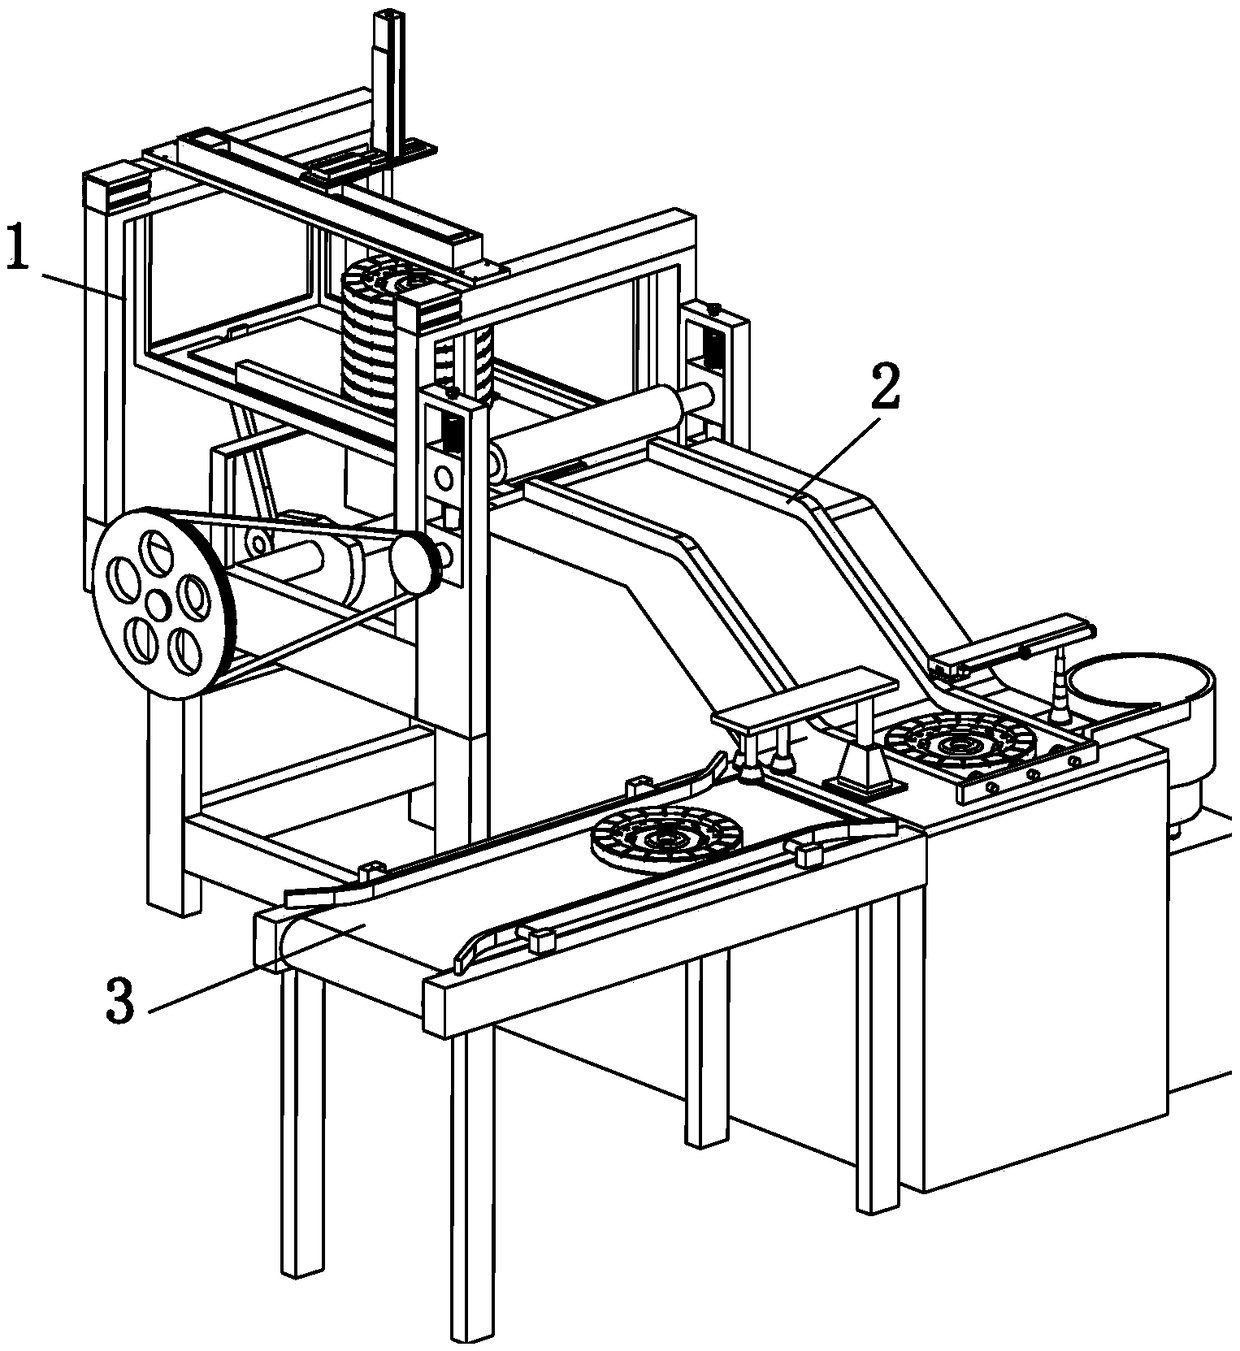 Automobile press disc vibration reduction assembly equipment